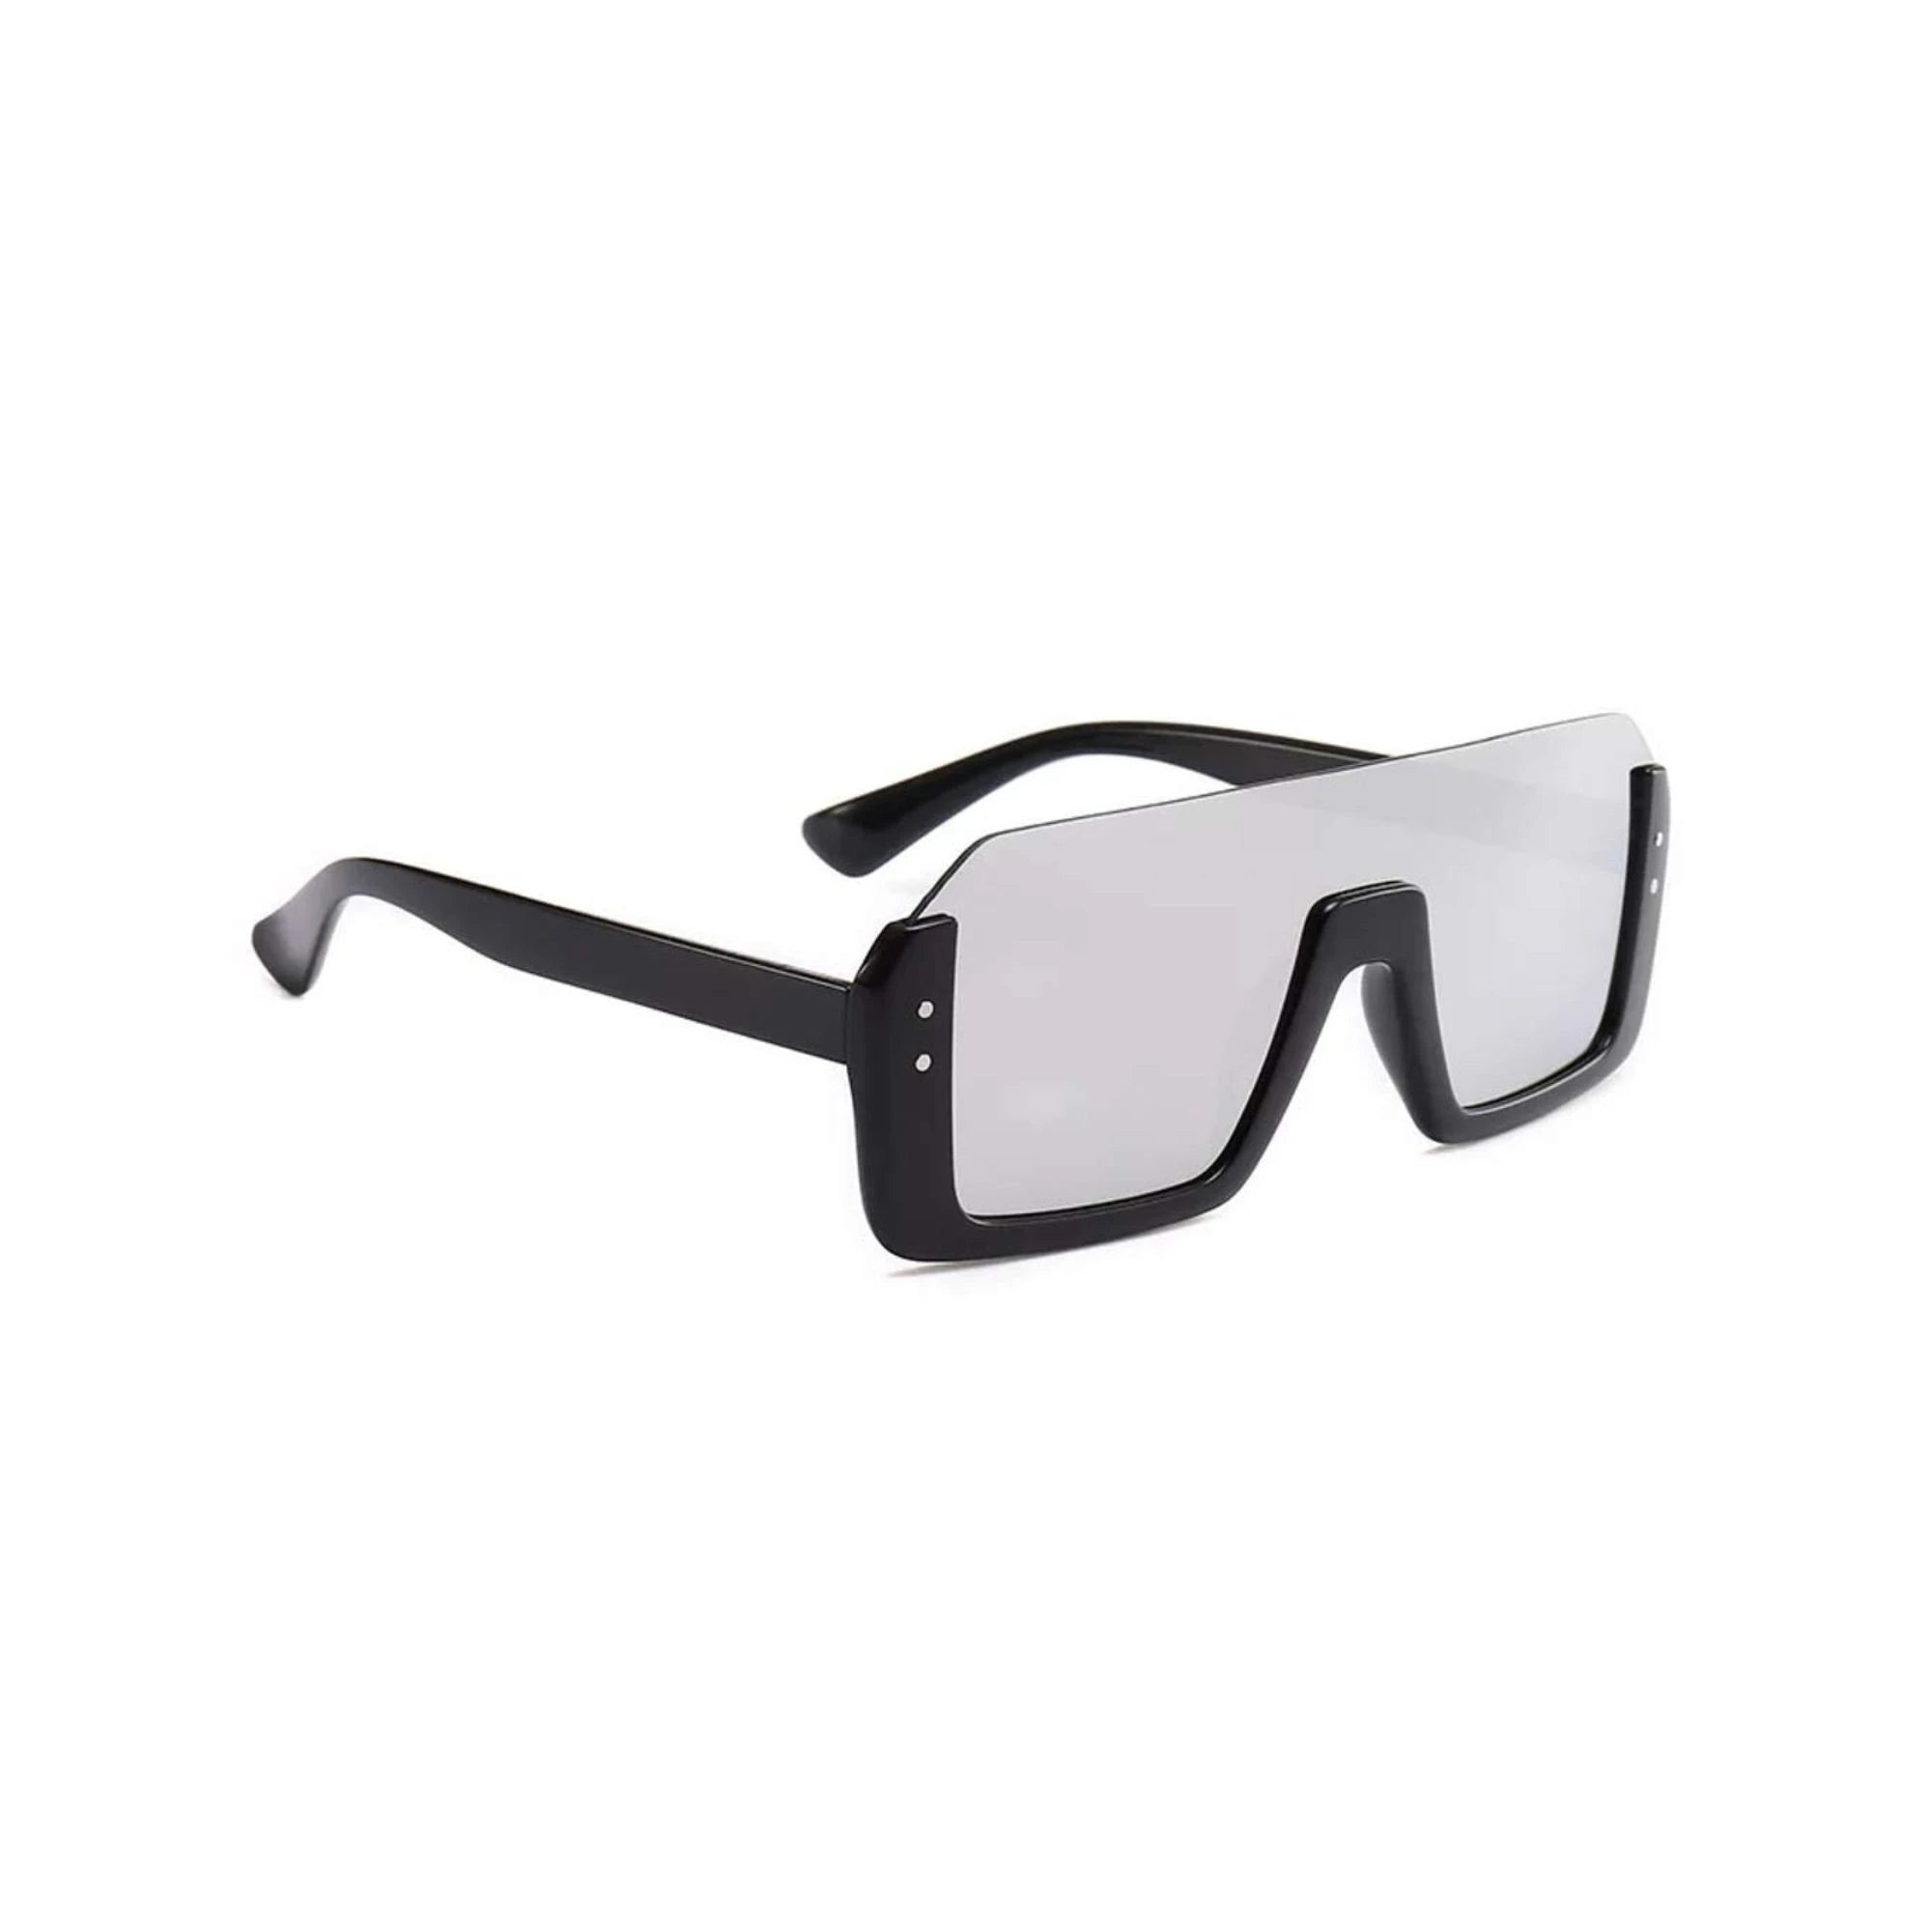 HautRim Series Half Rim Rectangular Sunglasses - Black Frame Silver Mirrored Lens